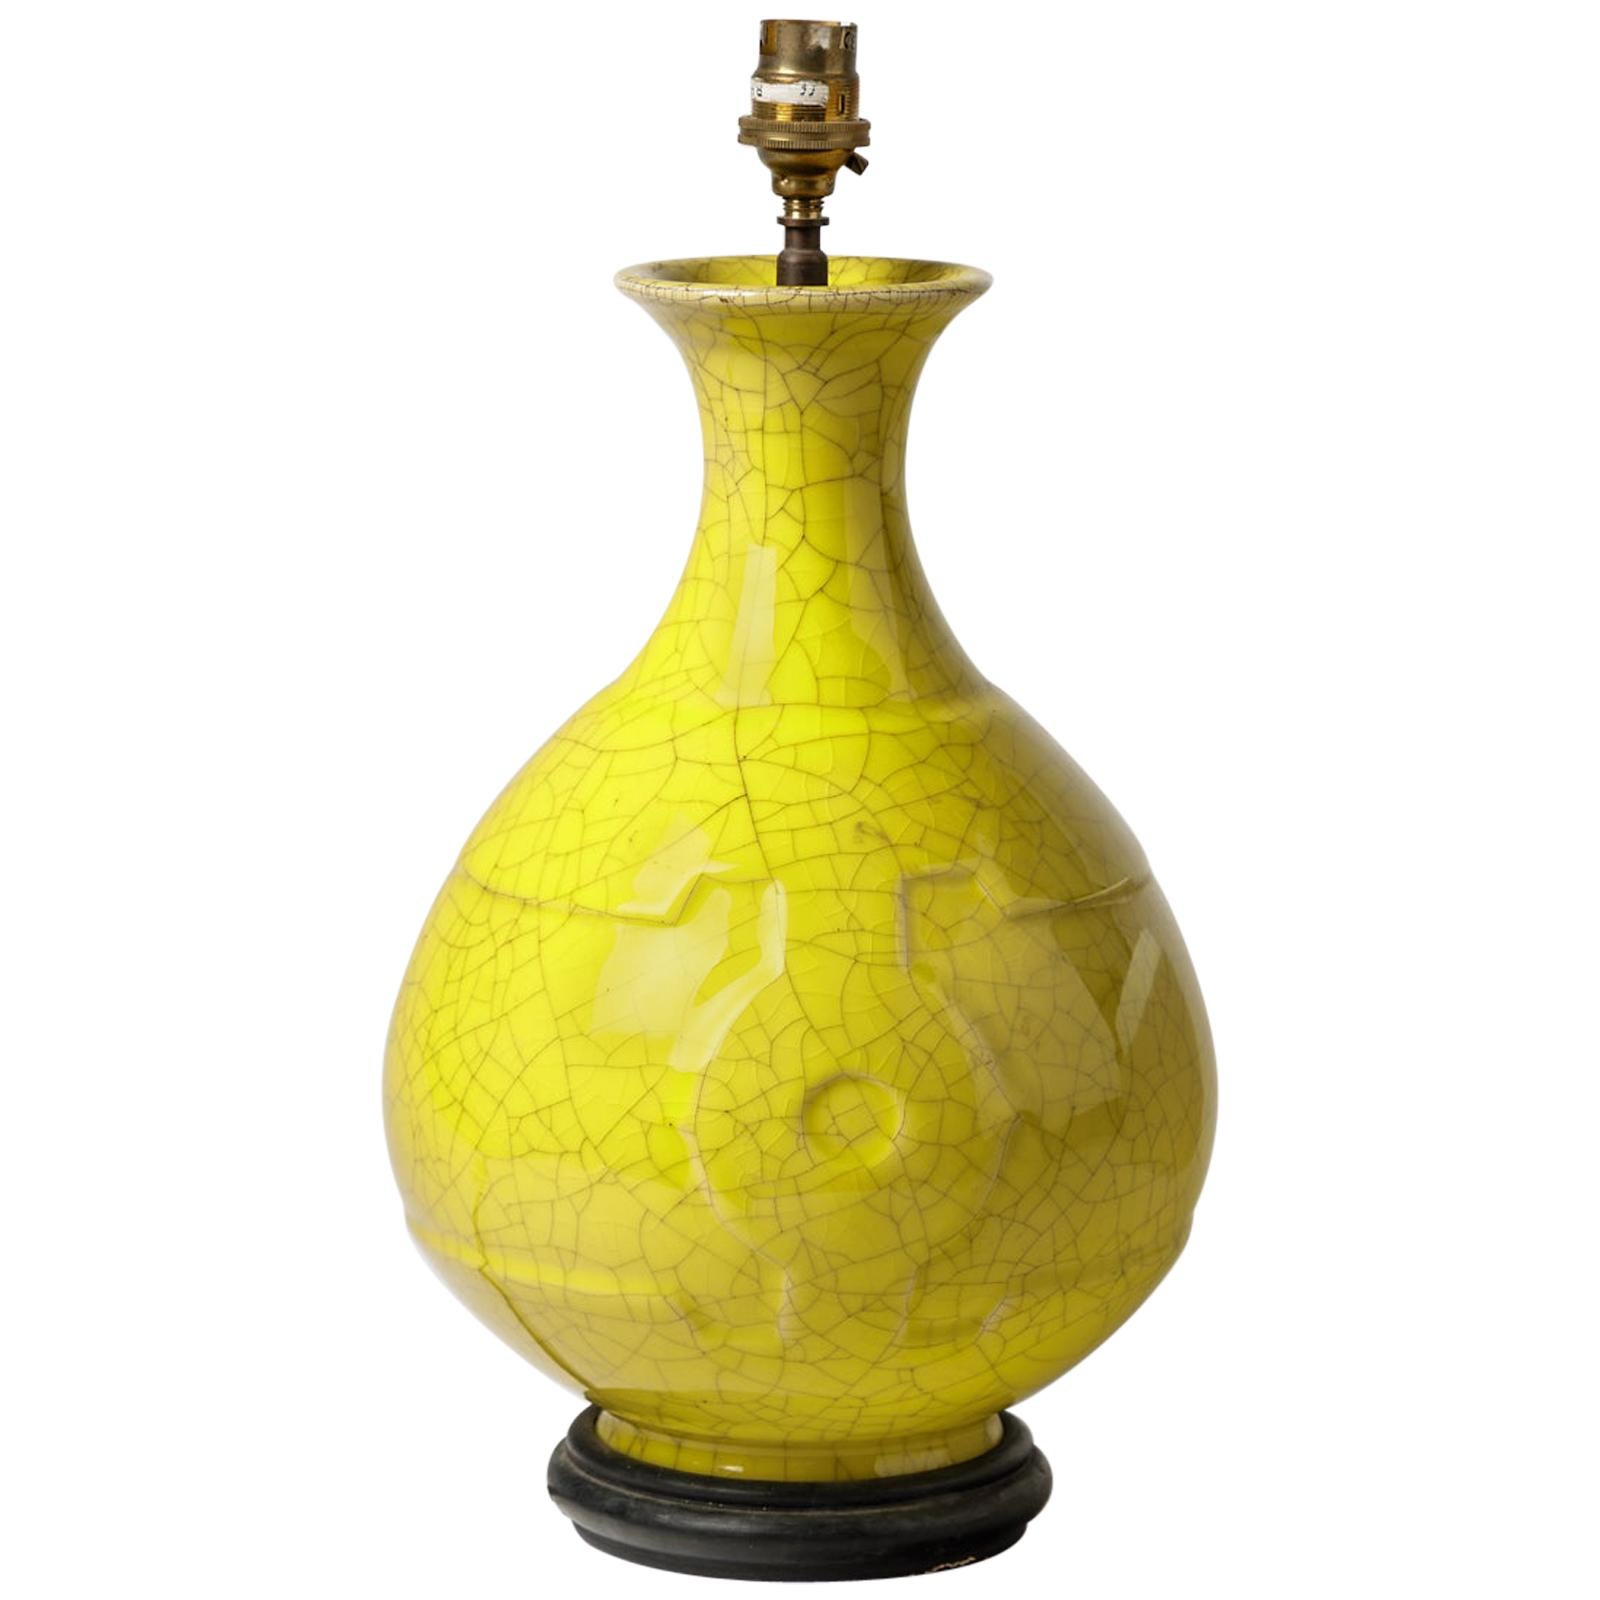 Mid-20th Century Shinny Yellow Art Deco Ceramic Table Lamp Geometric Form